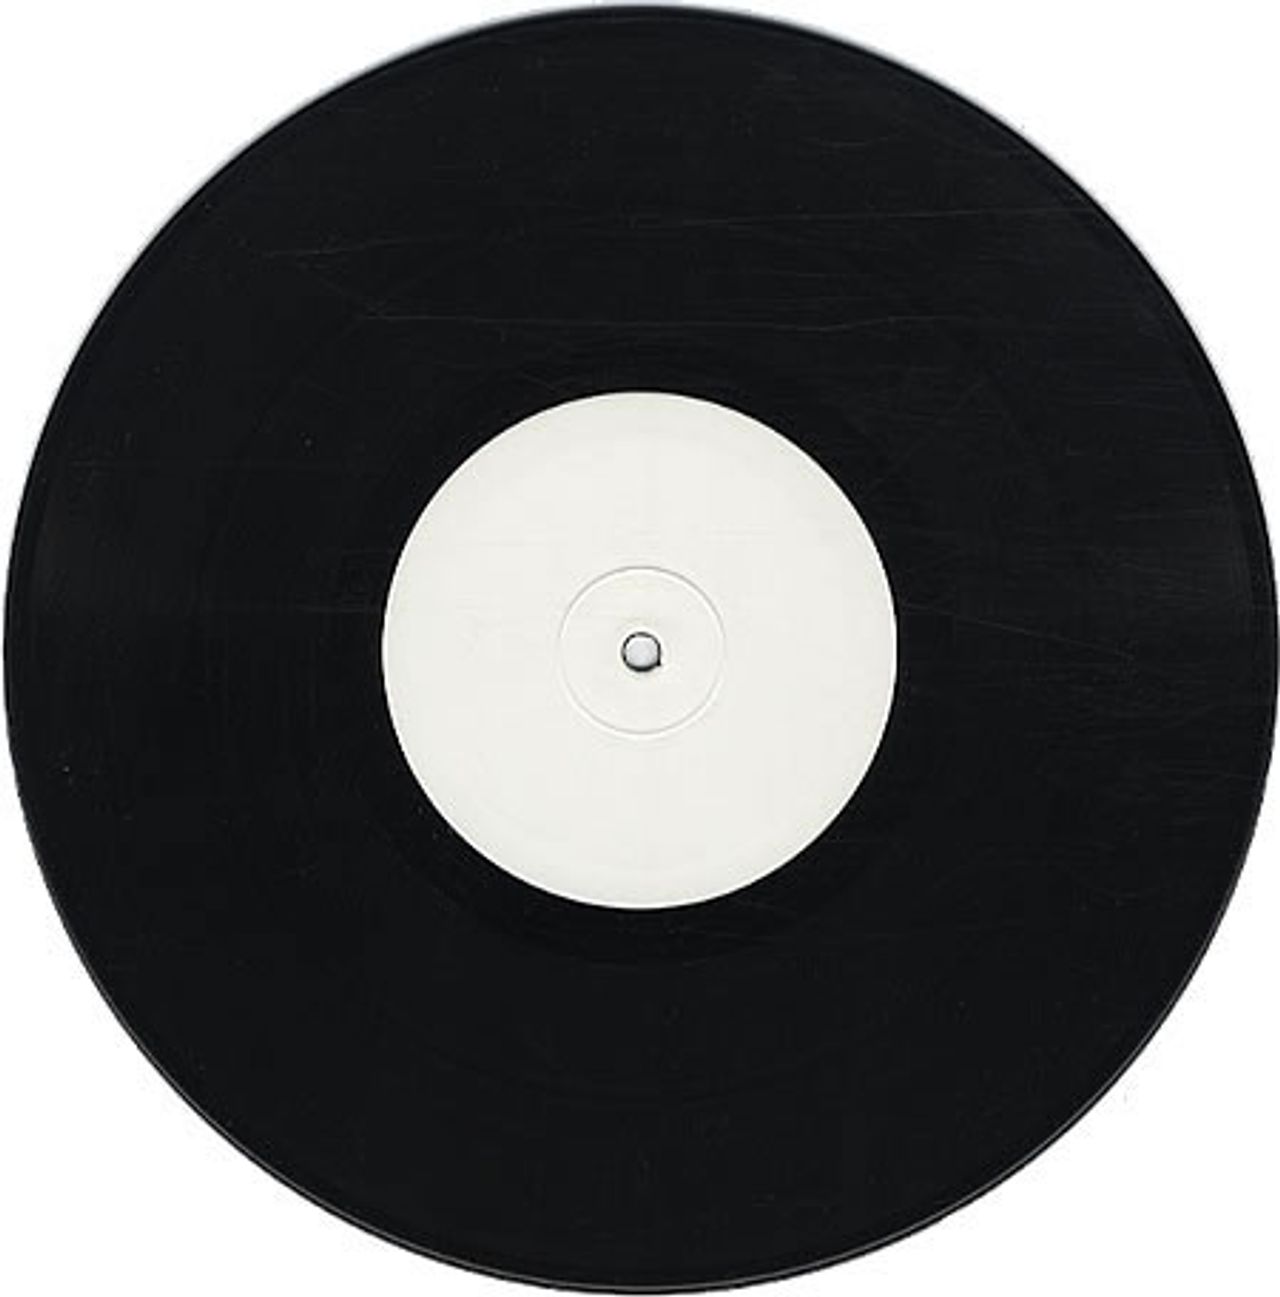 patient Hong Kong Lee The Beach Boys Stack O' Tracks - White Label Test Pressing UK Vinyl LP —  RareVinyl.com